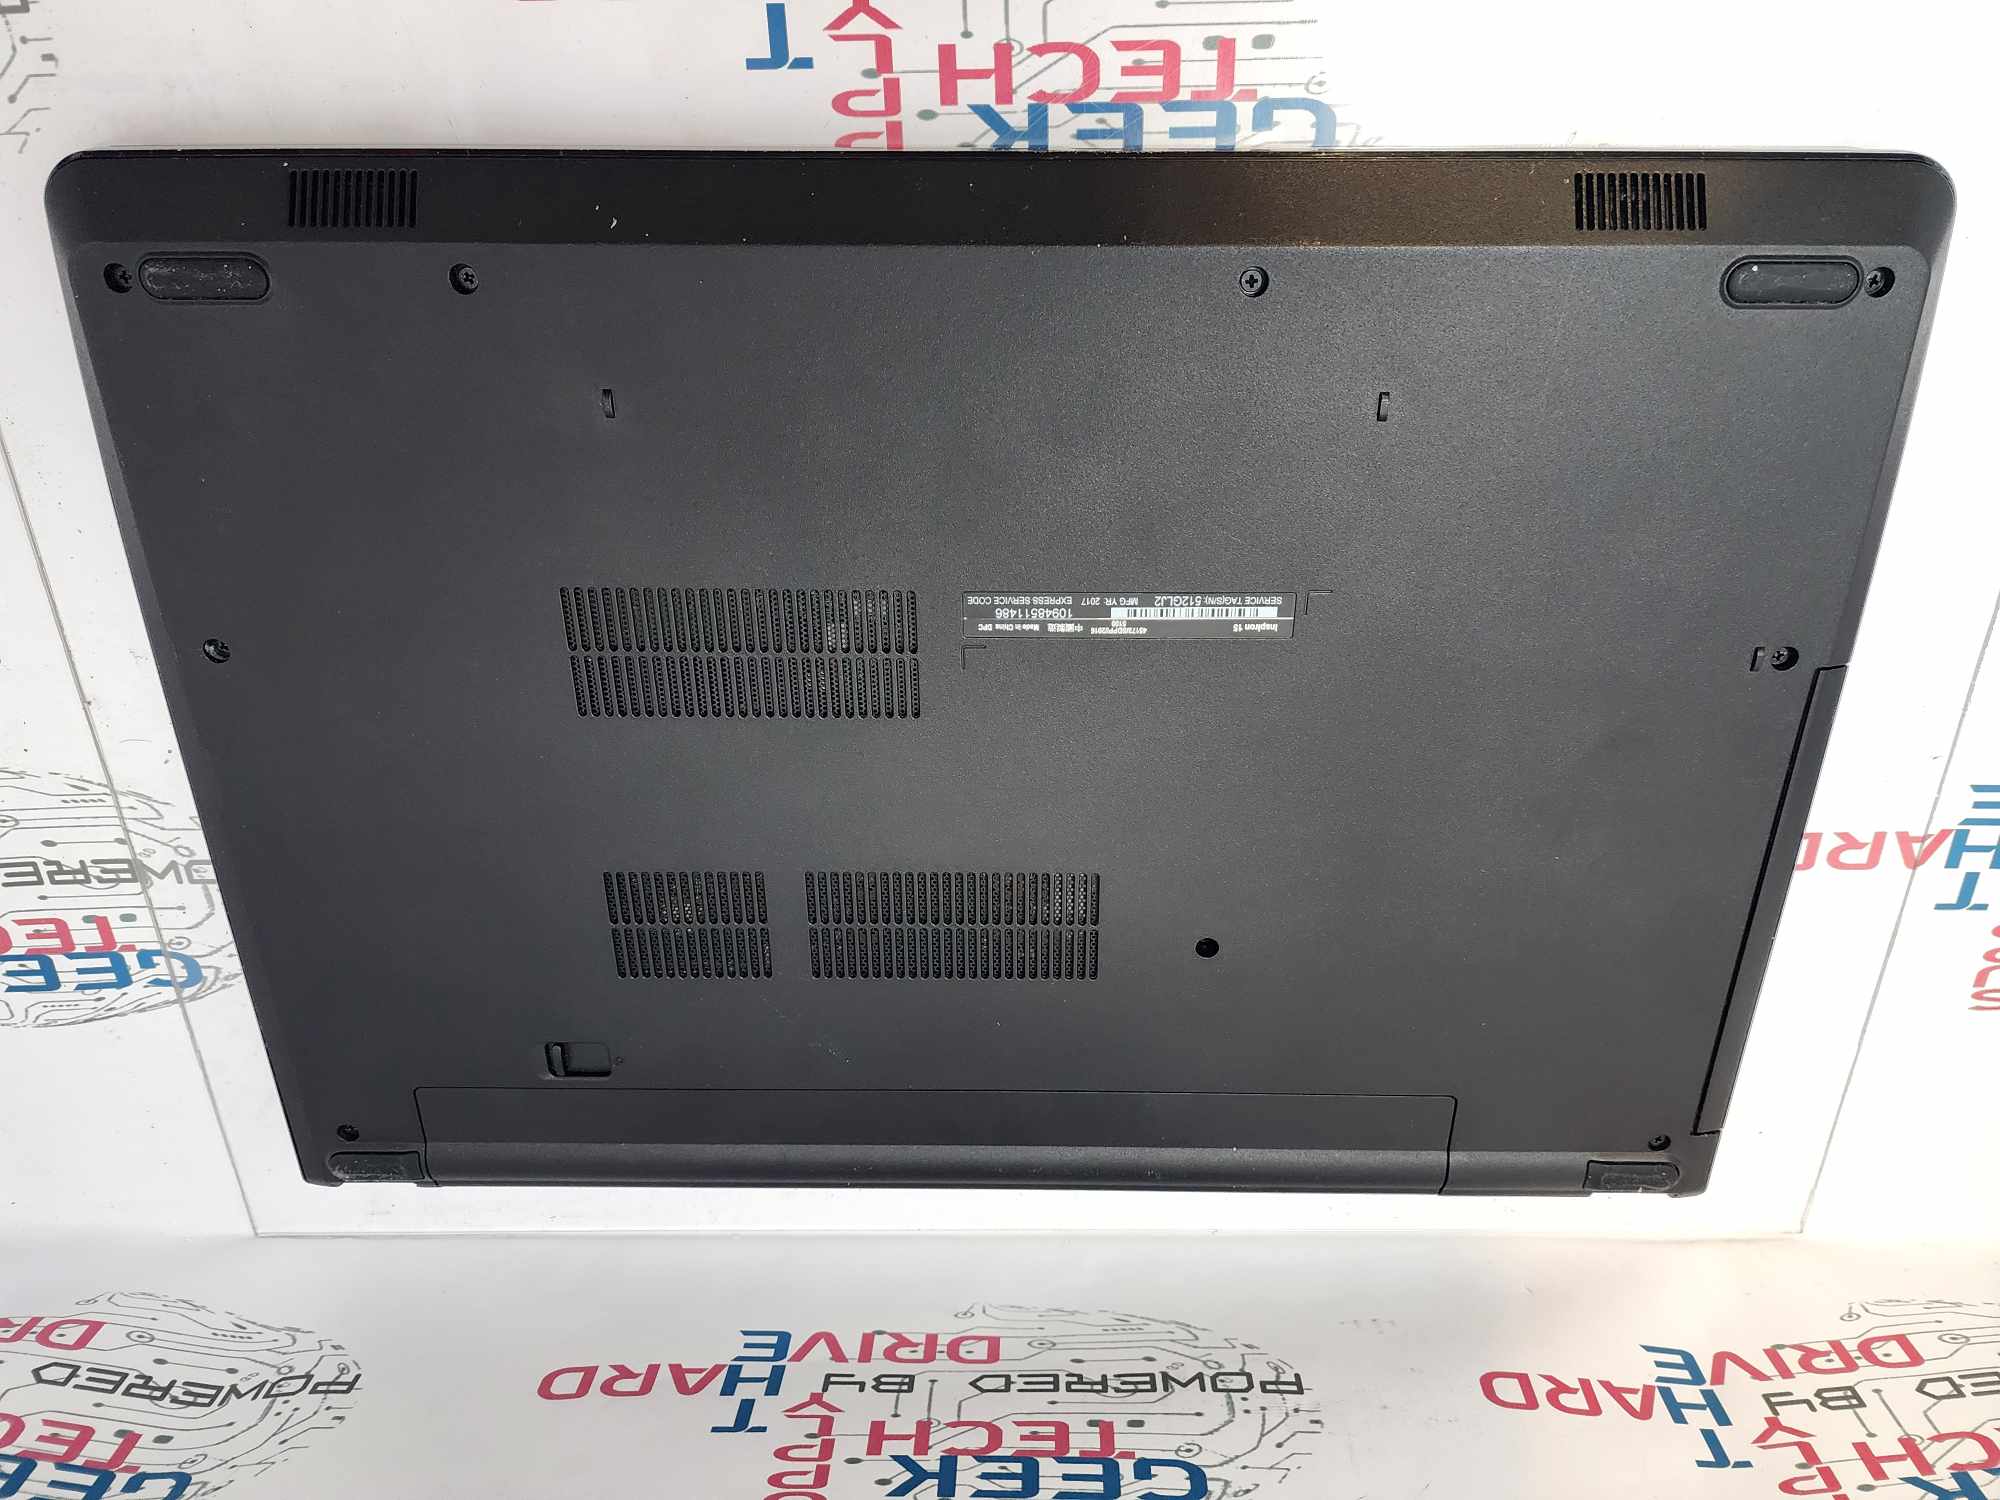 Dell Inspiron 15 3567 Laptop i3-7100U 500GB SSD 6GB DDR4 Webcam Black | B Grade - Geek Tech